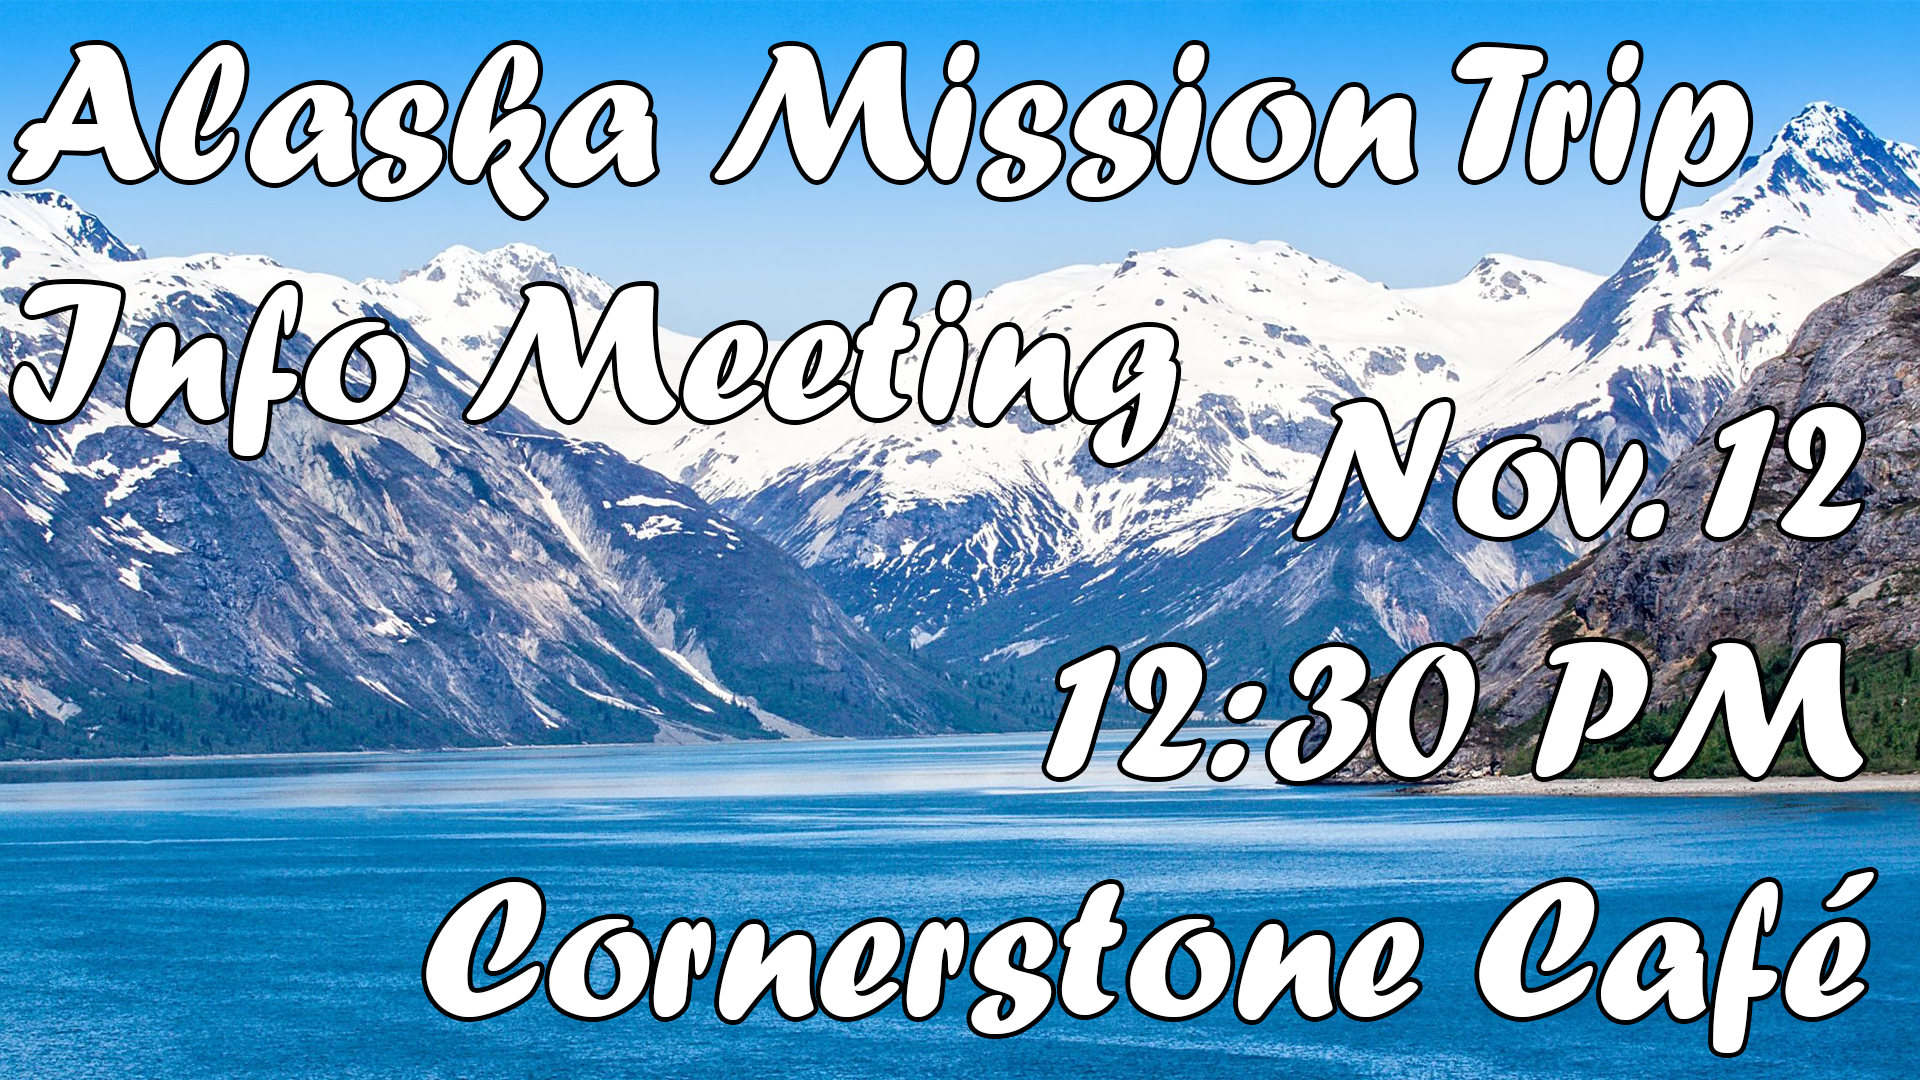 Alaska Info Meeting - November 12th at 12:30 PM at the Cornerstone Cafe - Fee Fee Baptist Church